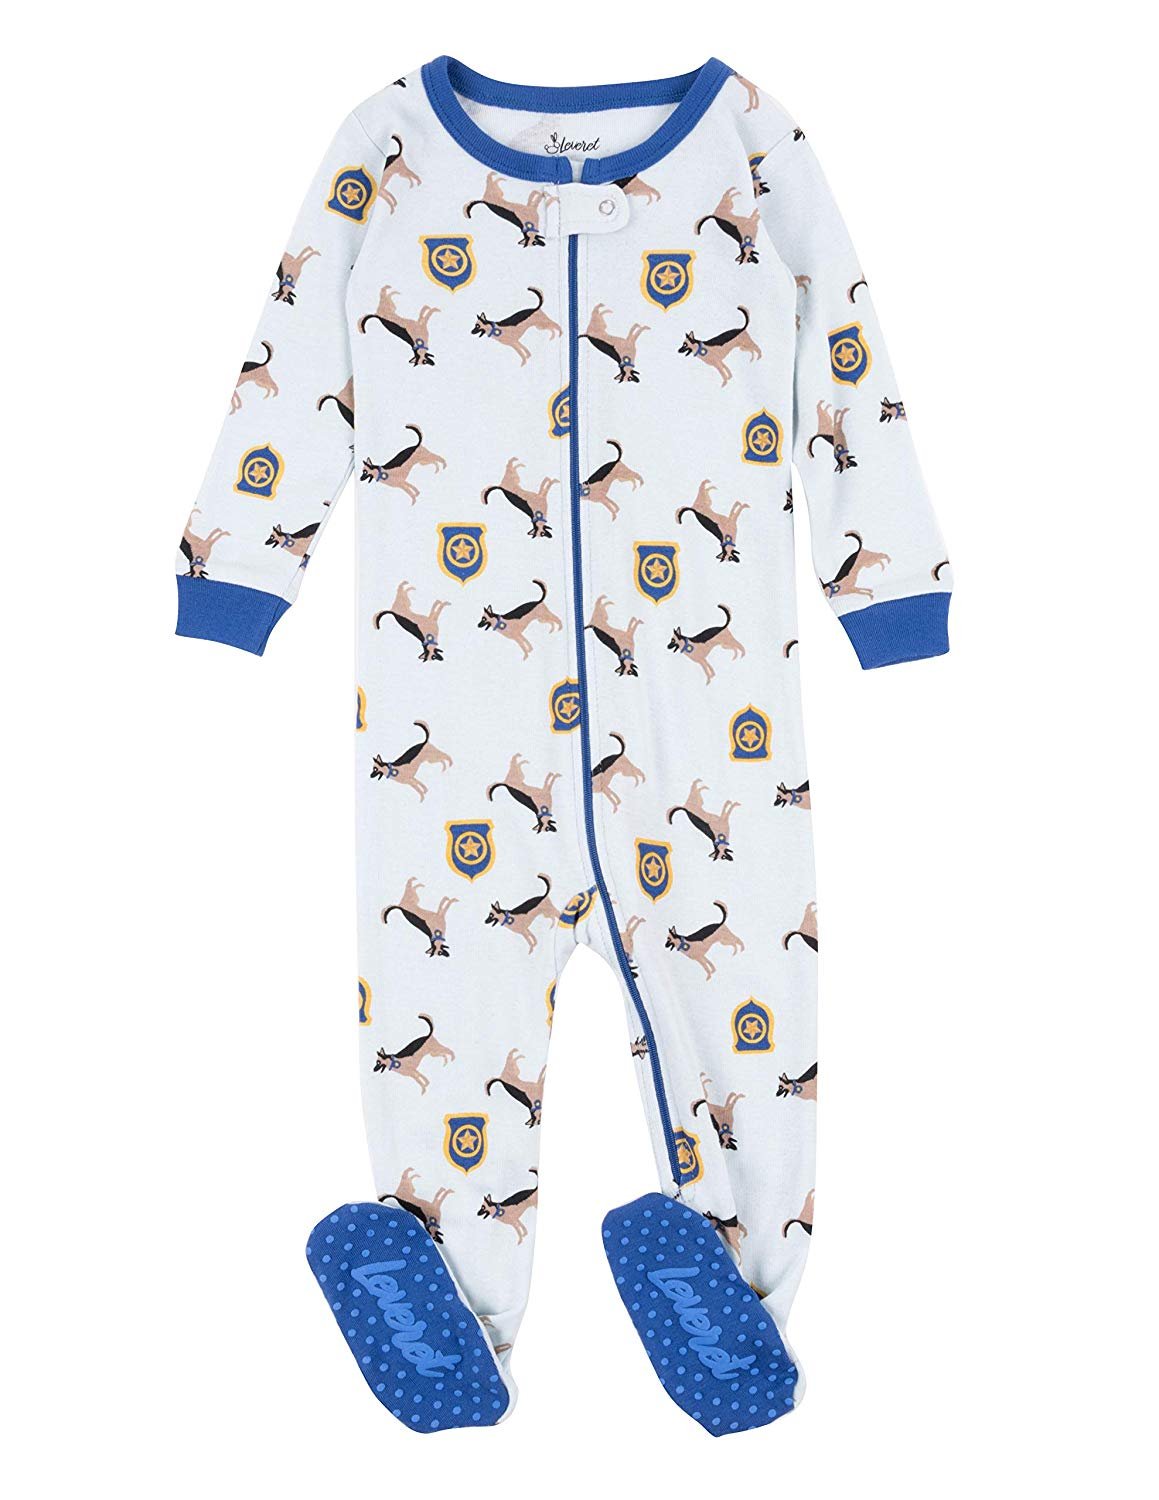 Leveret Kids /& Toddler Boys Girls Footed Pajamas 100/% Cotton Rhino Size 4 Years